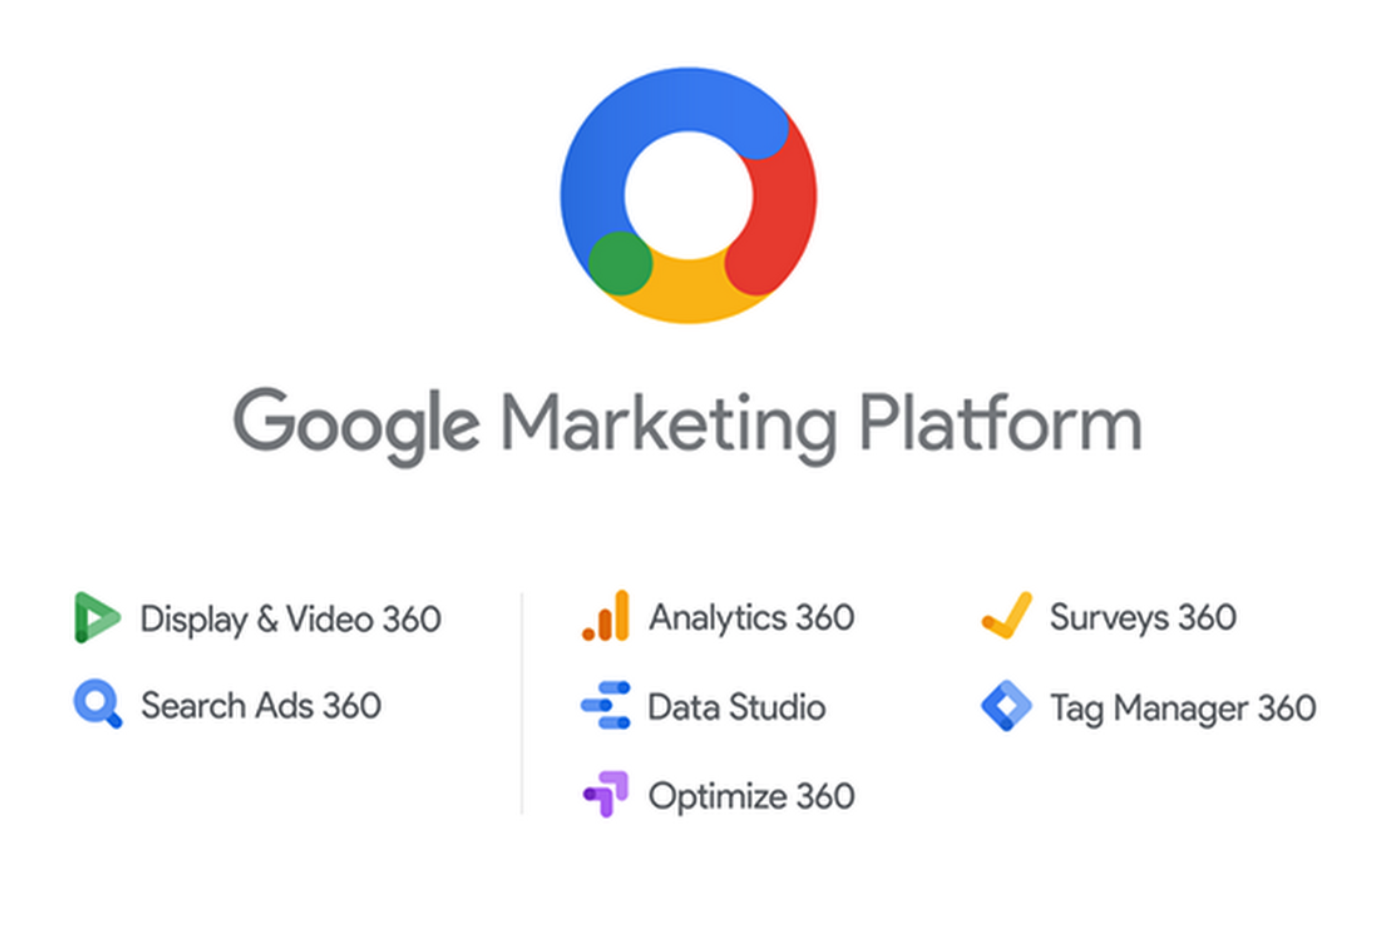 Google Marketing Platform Full Stack